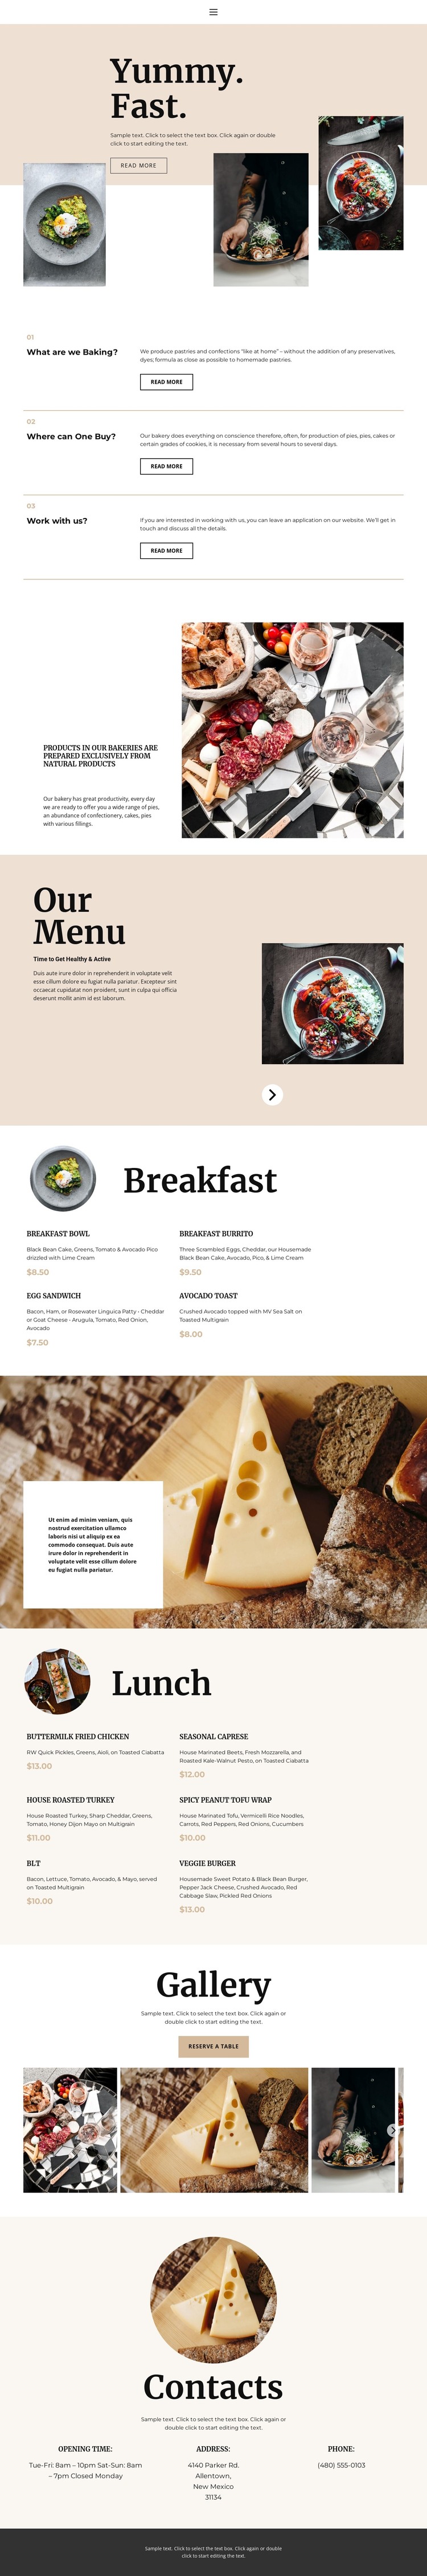 New restaurant Web Design